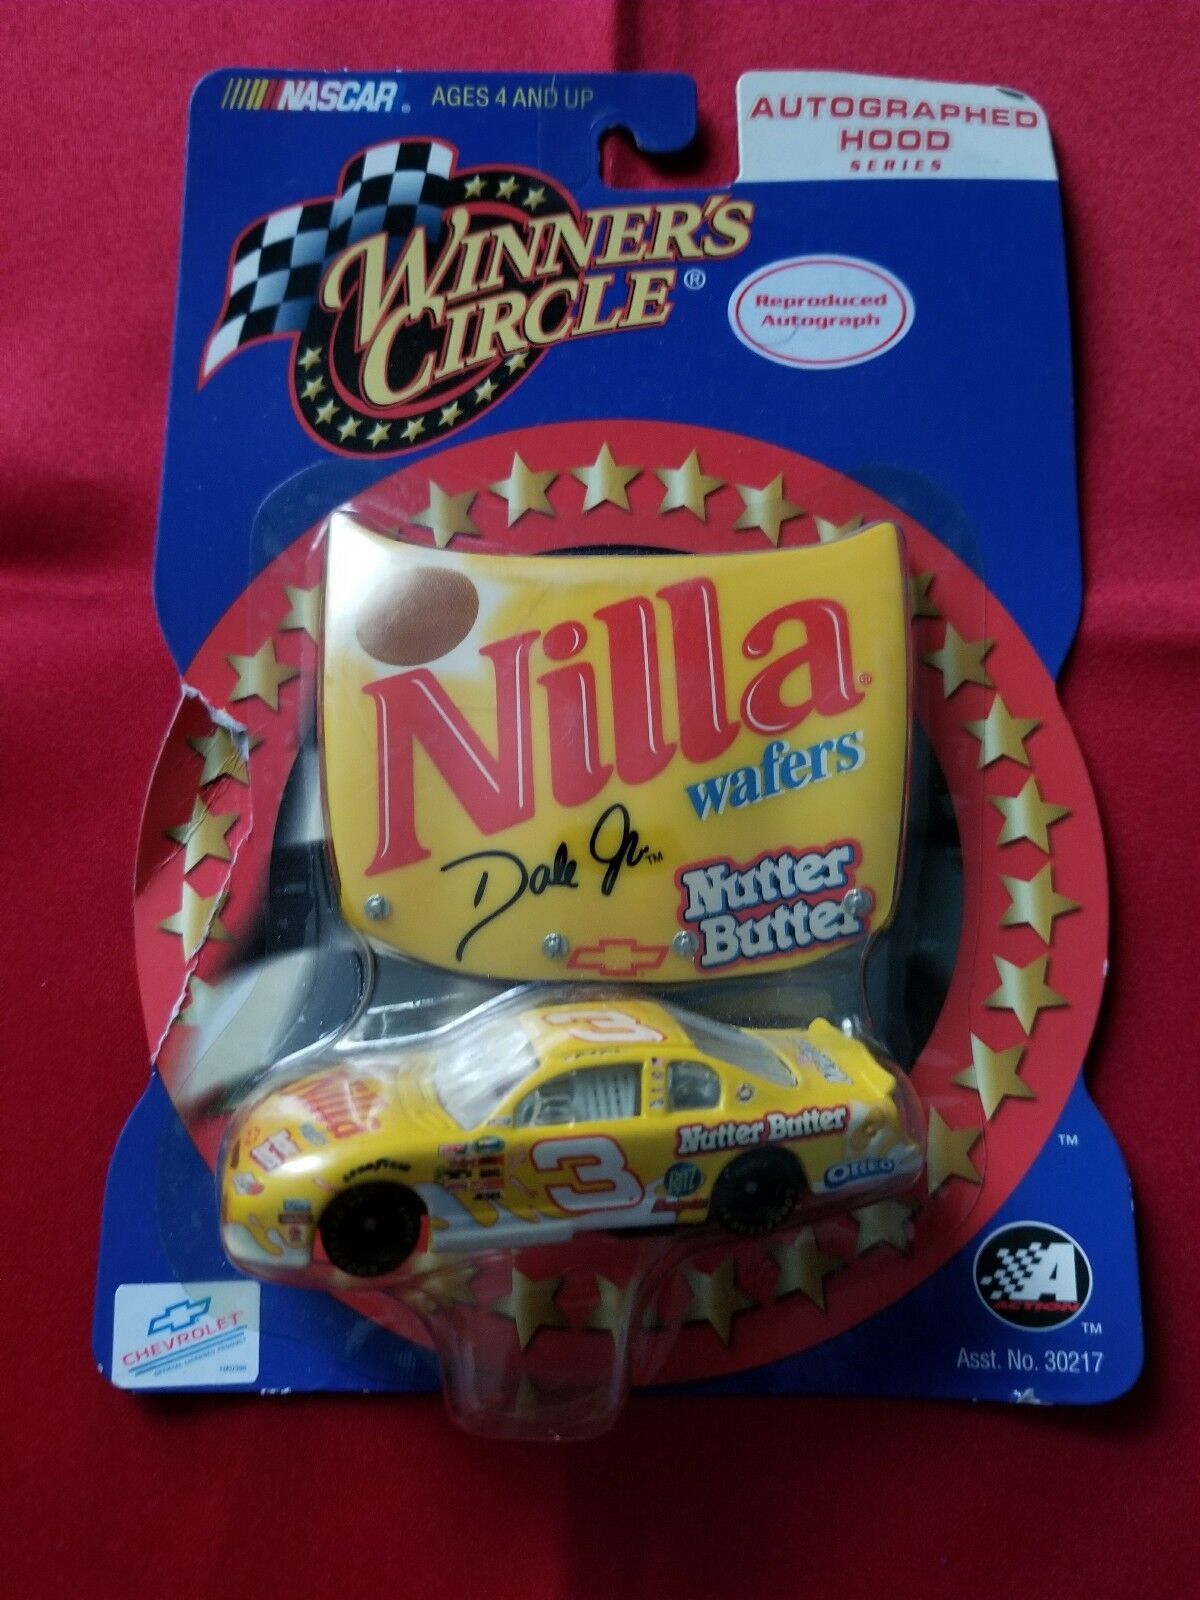 NASCAR WINNERS CIRCLE  DALE EARNHARDT JR #3 NILLA 1:64 HOOD SERIES - $10.00